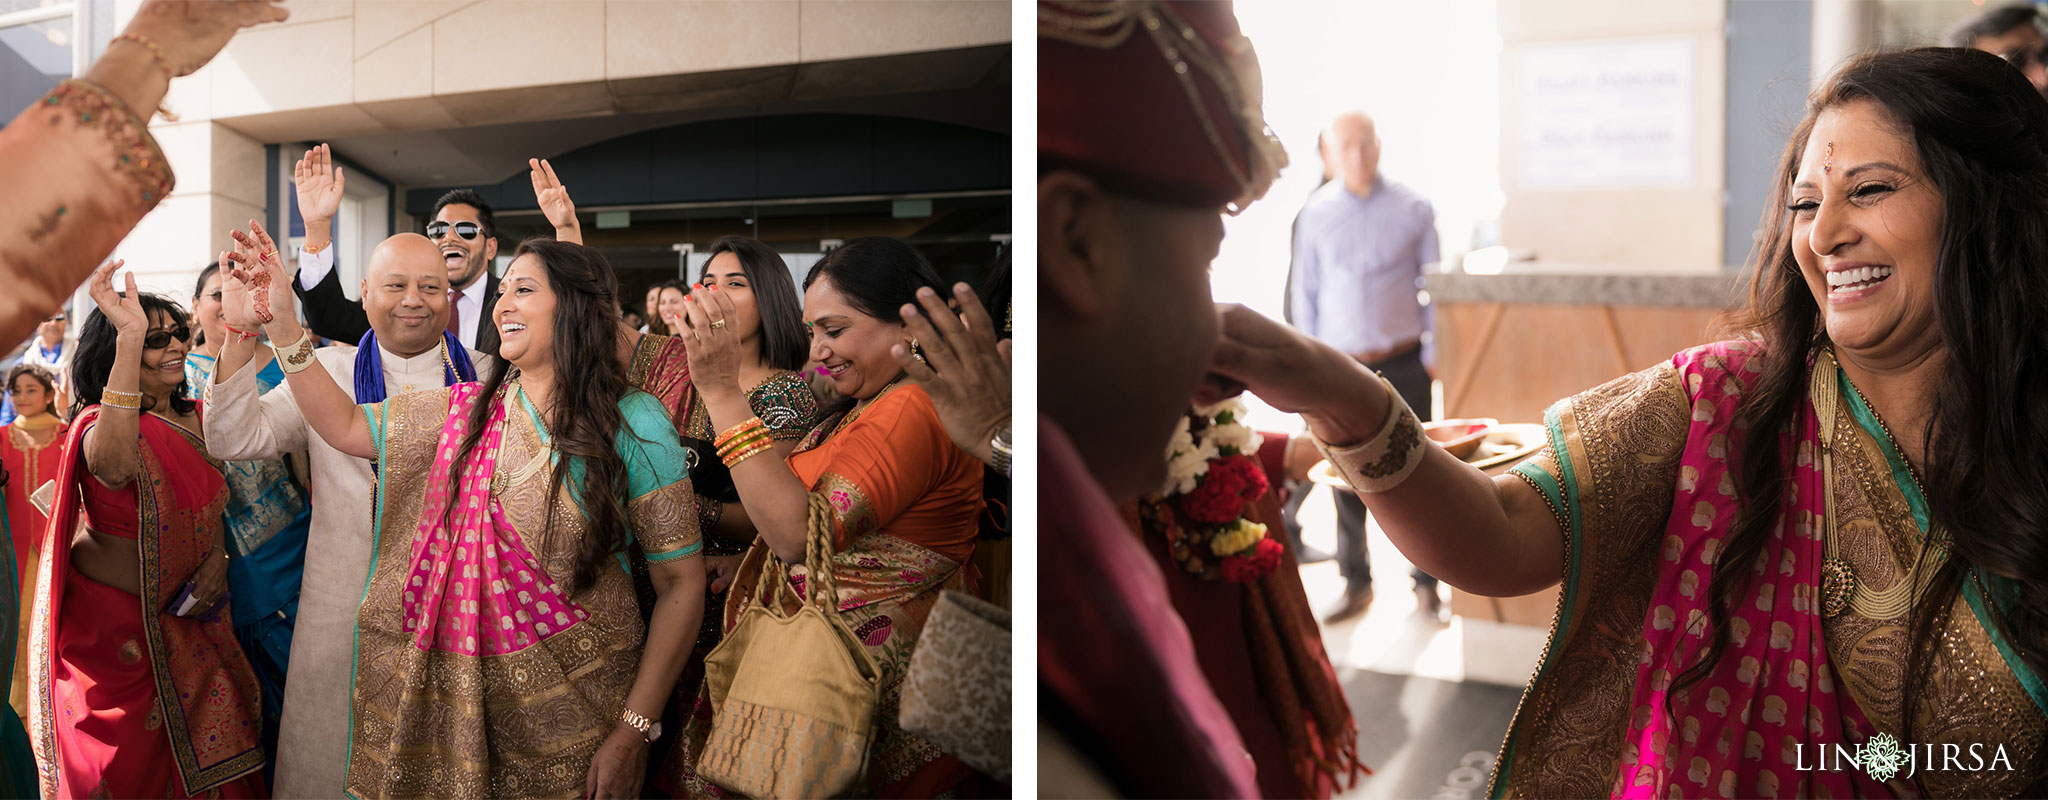 20 loews coronado bay resort indian baraat wedding photography